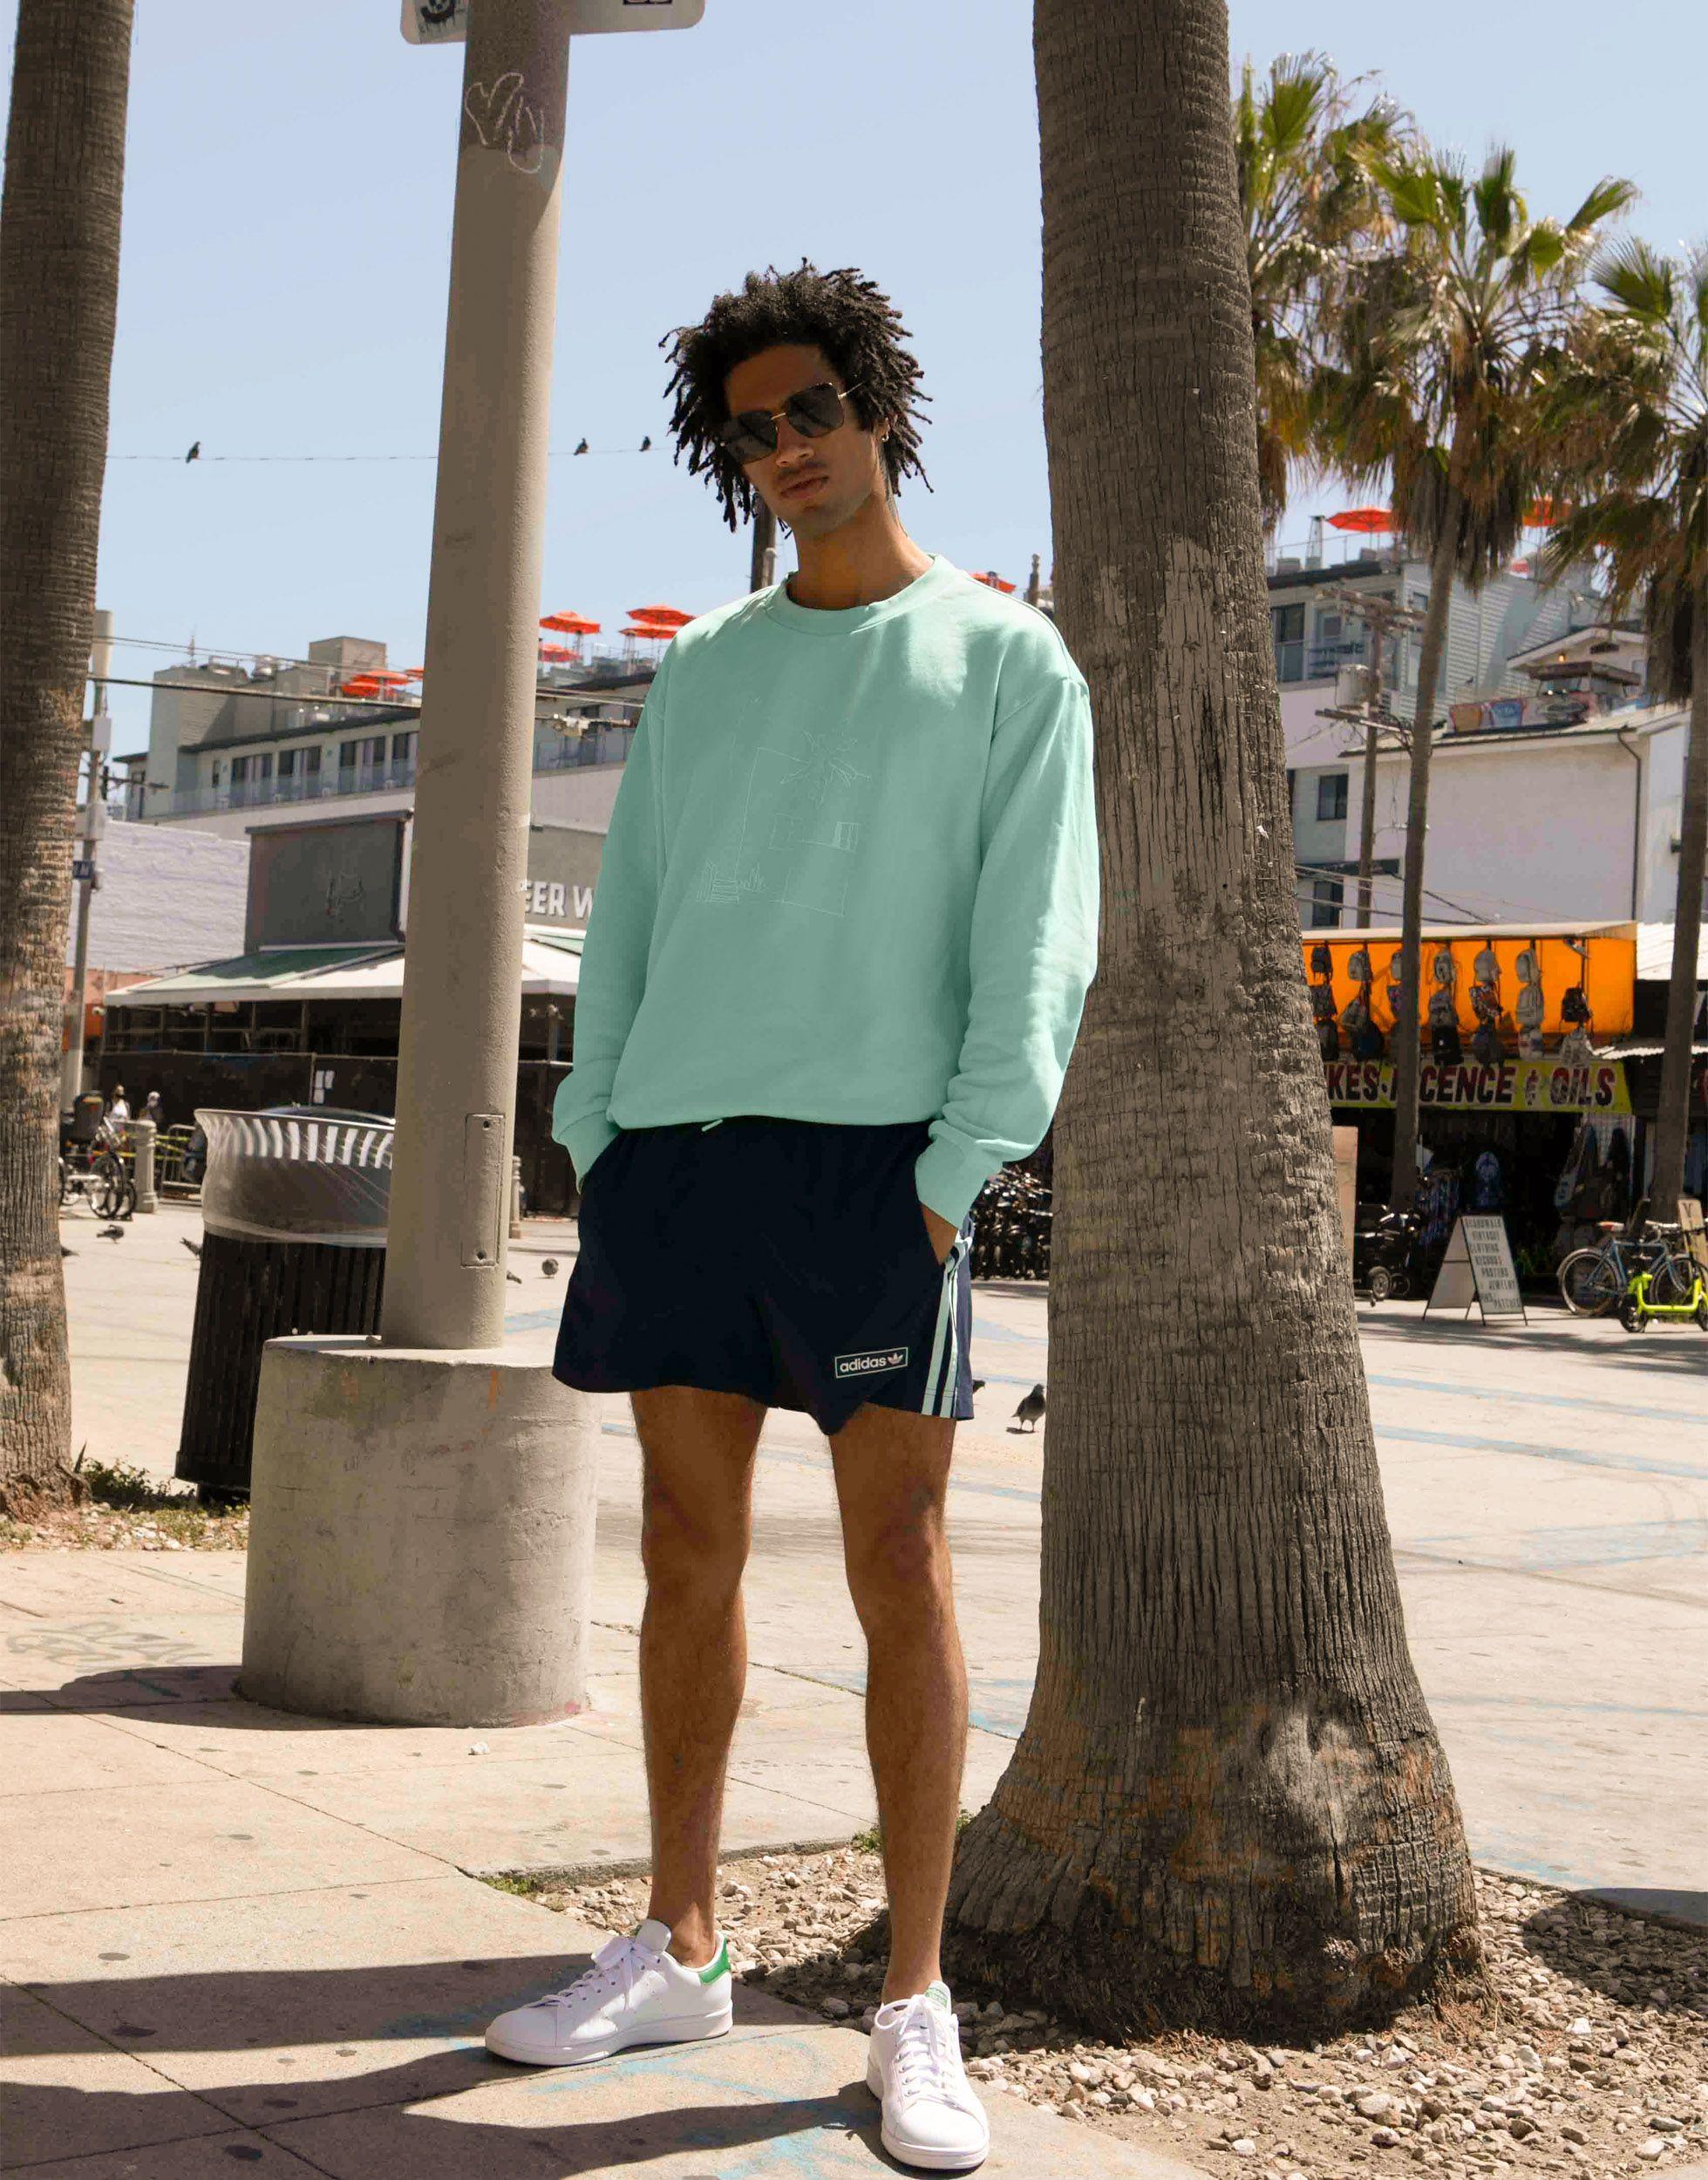 Adidas Trefoil Sweatshirt Street Style Outfit - Your Average Guy